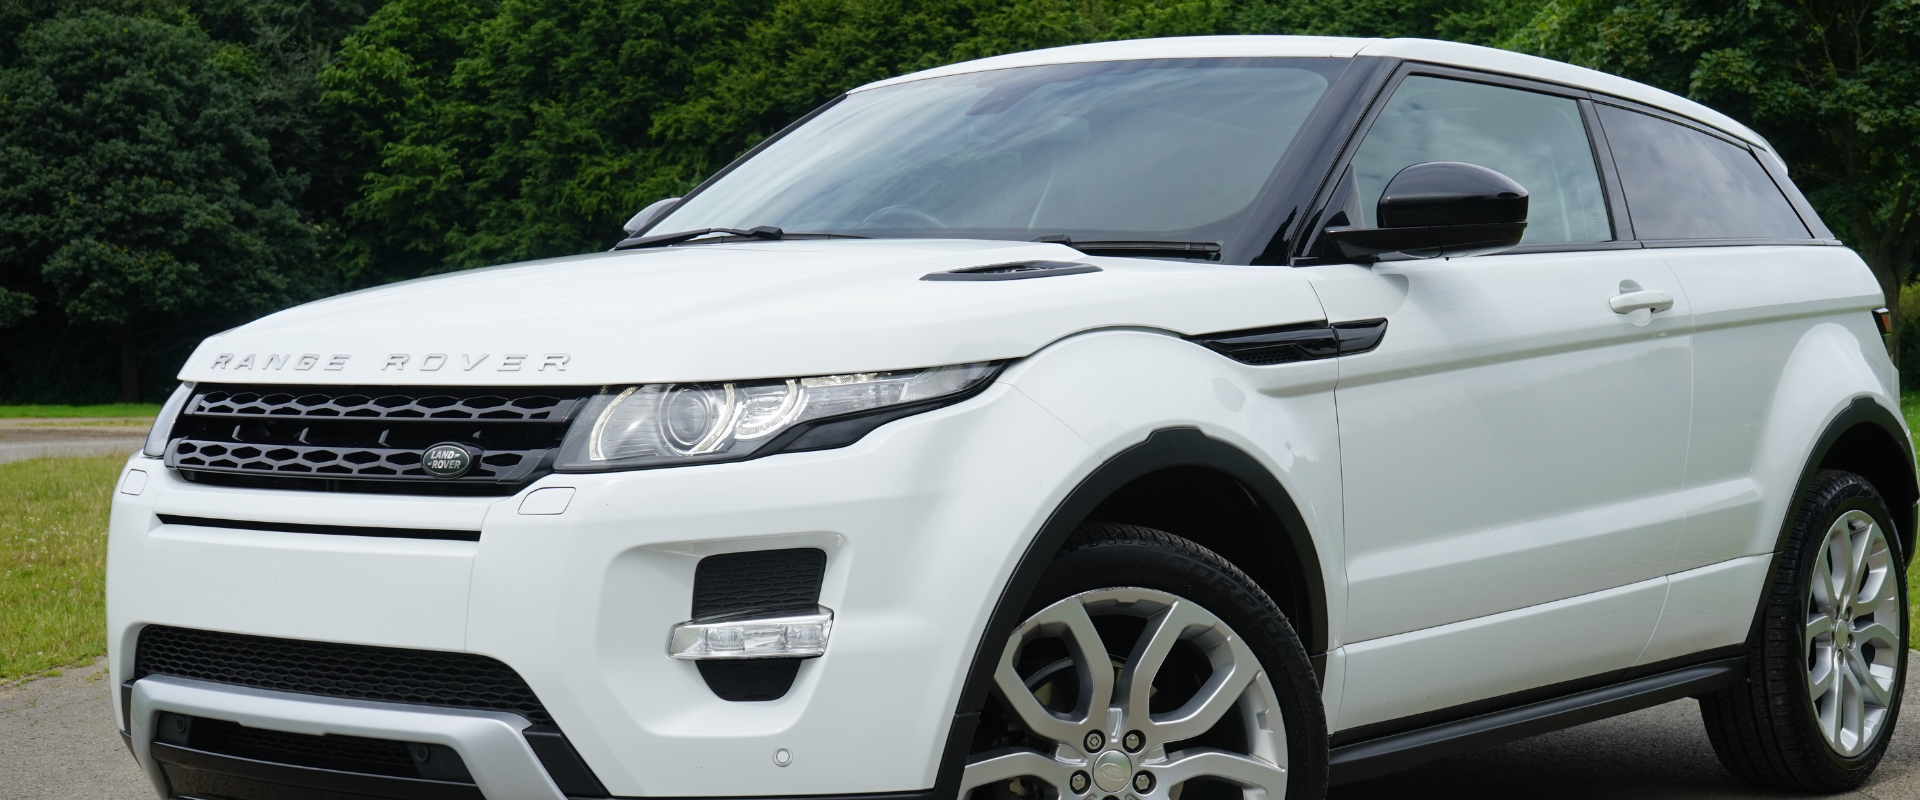 Nova Wallet VS Range Rover | Zuboot Durability Test